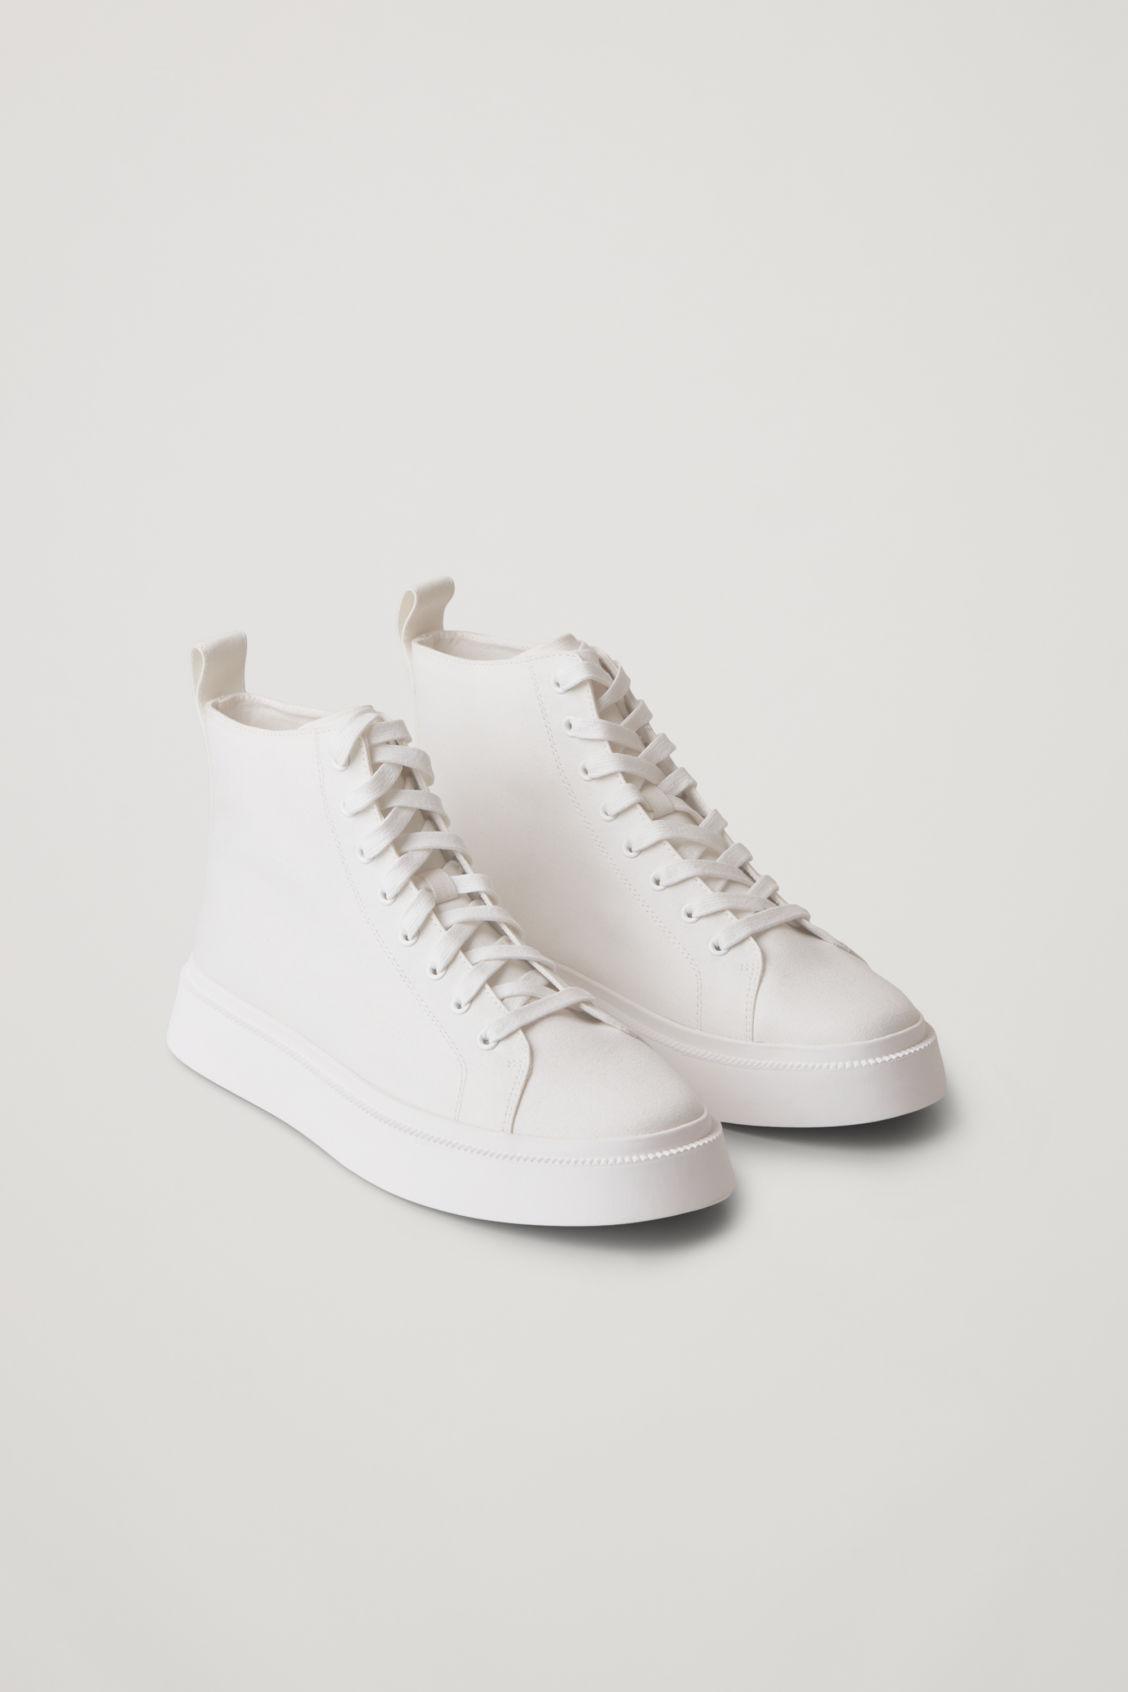 Økonomi tit Øde COS Cotton Canvas High-top Sneakers in White | Lyst